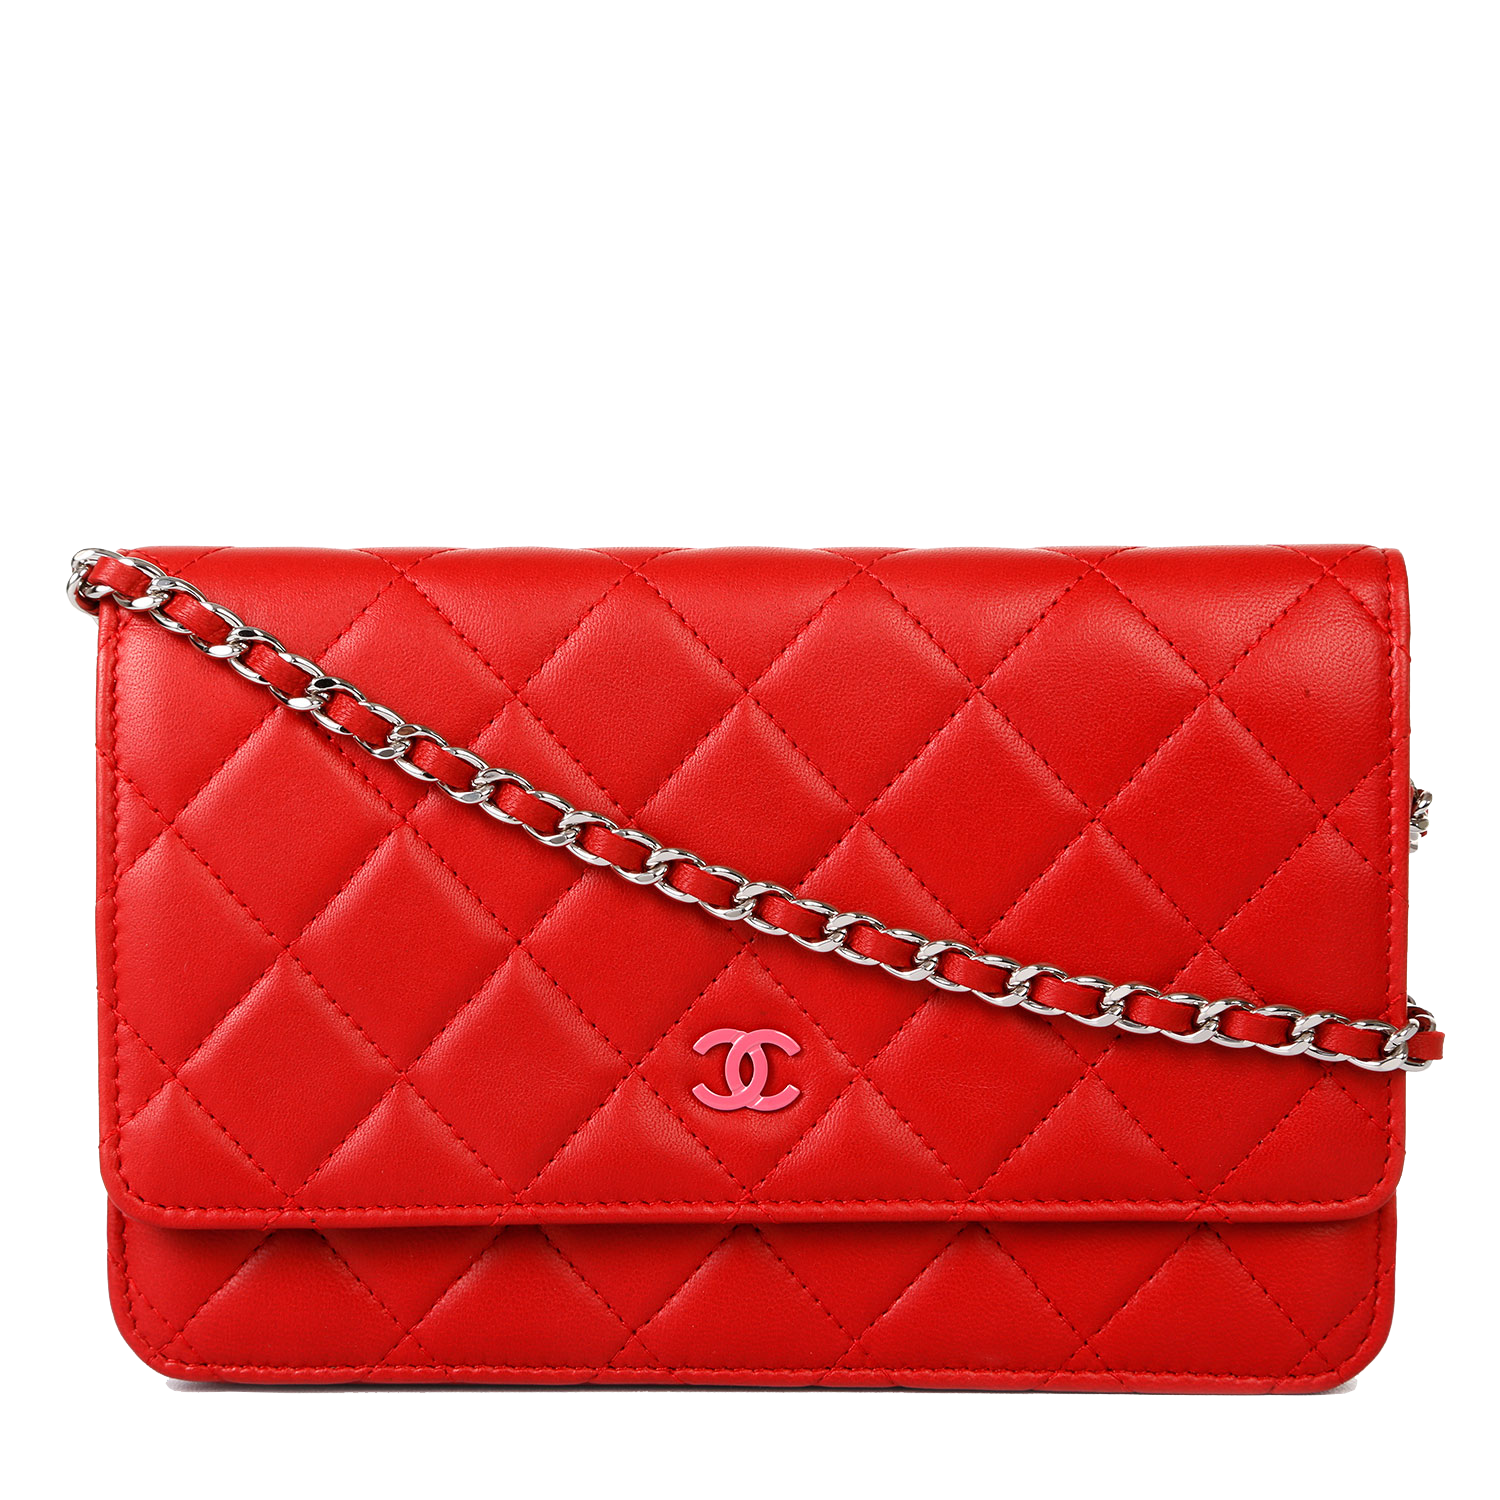 Handbag Leather Chanel Red Bag Free Transparent Image HQ Clipart